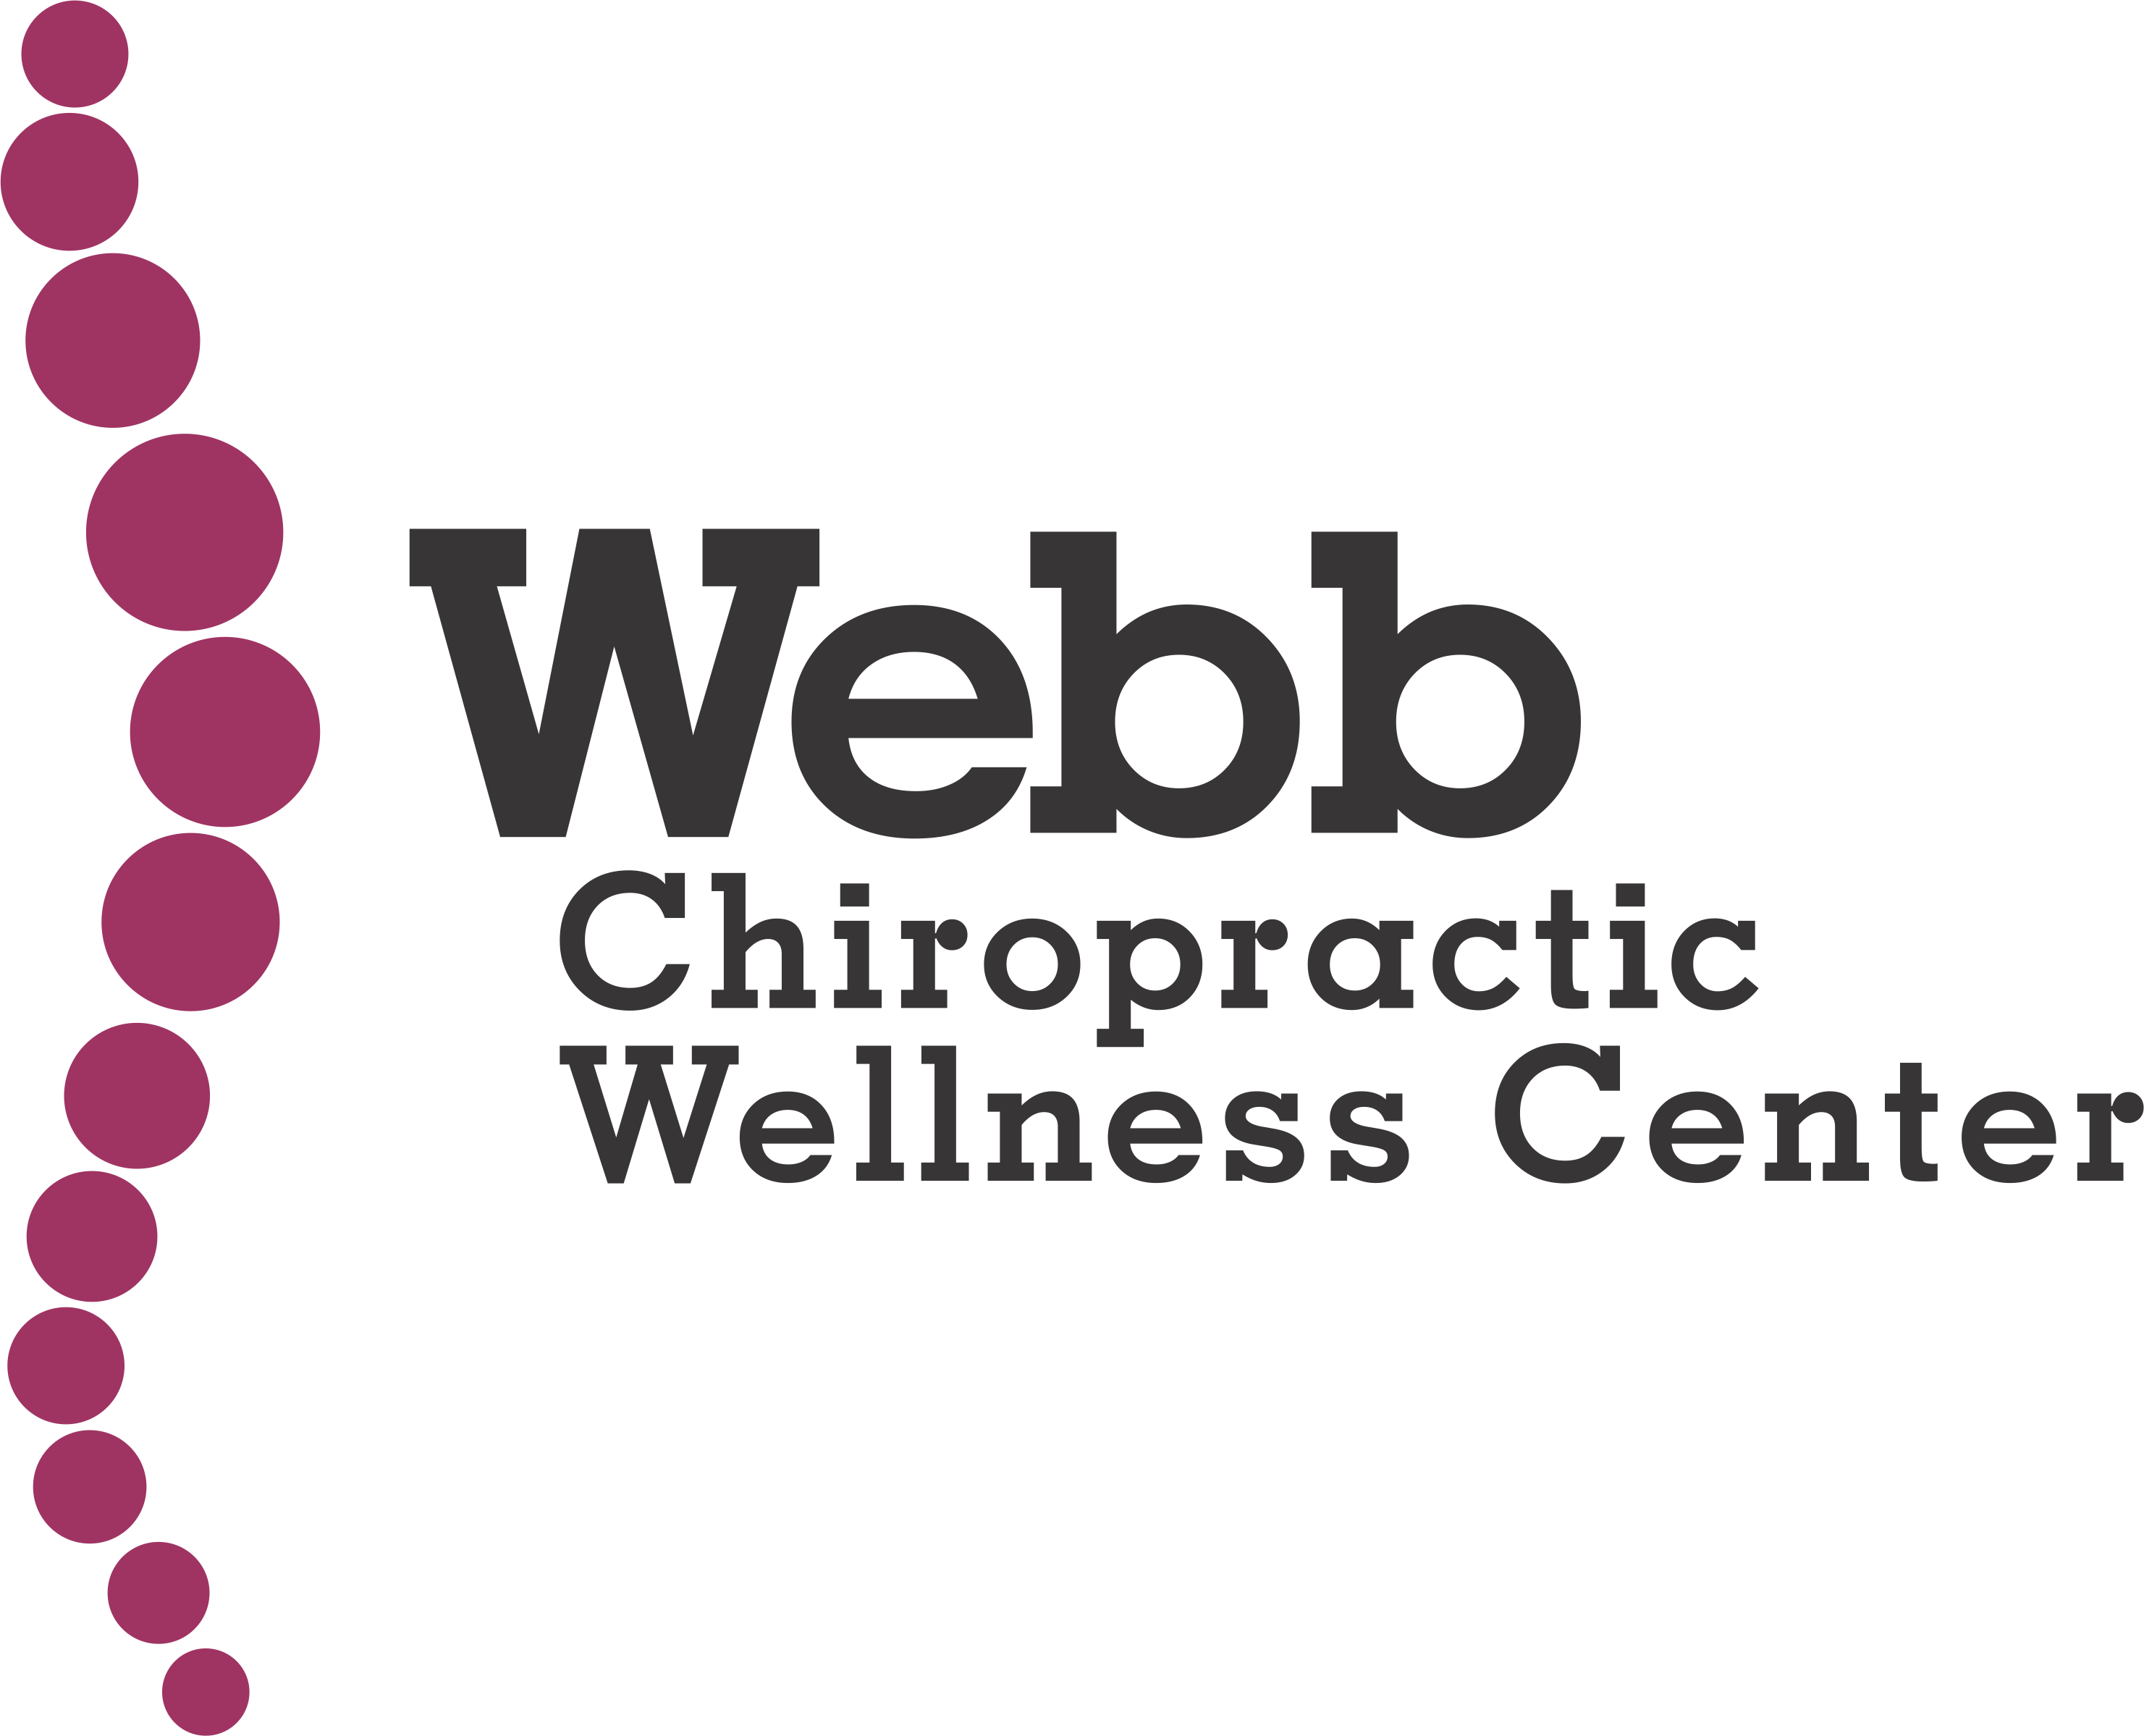 Webb Chiropractic Wellness Center